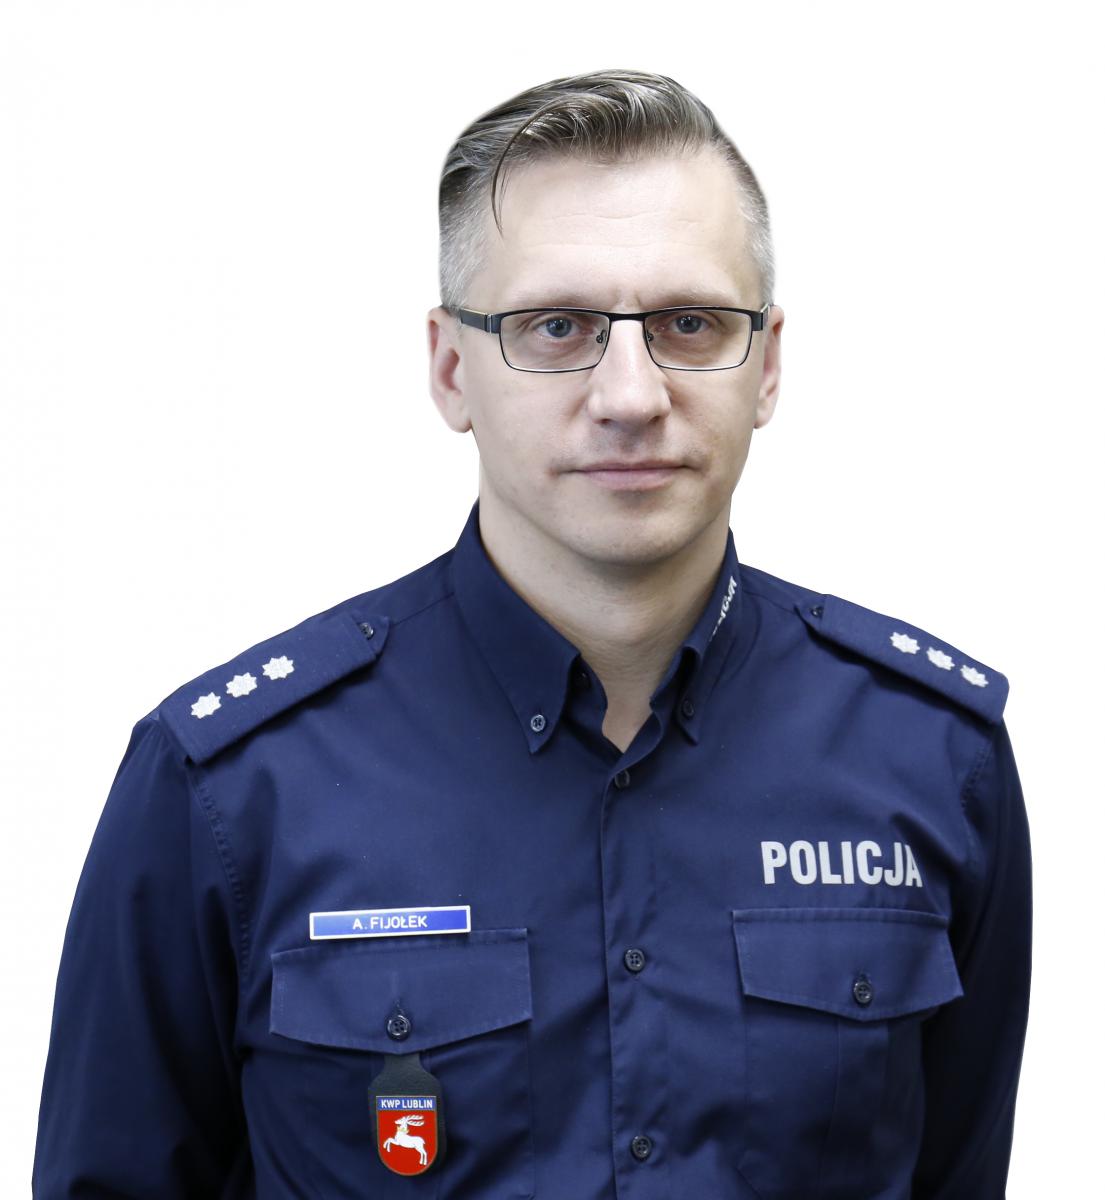 Andrzej Fijolek